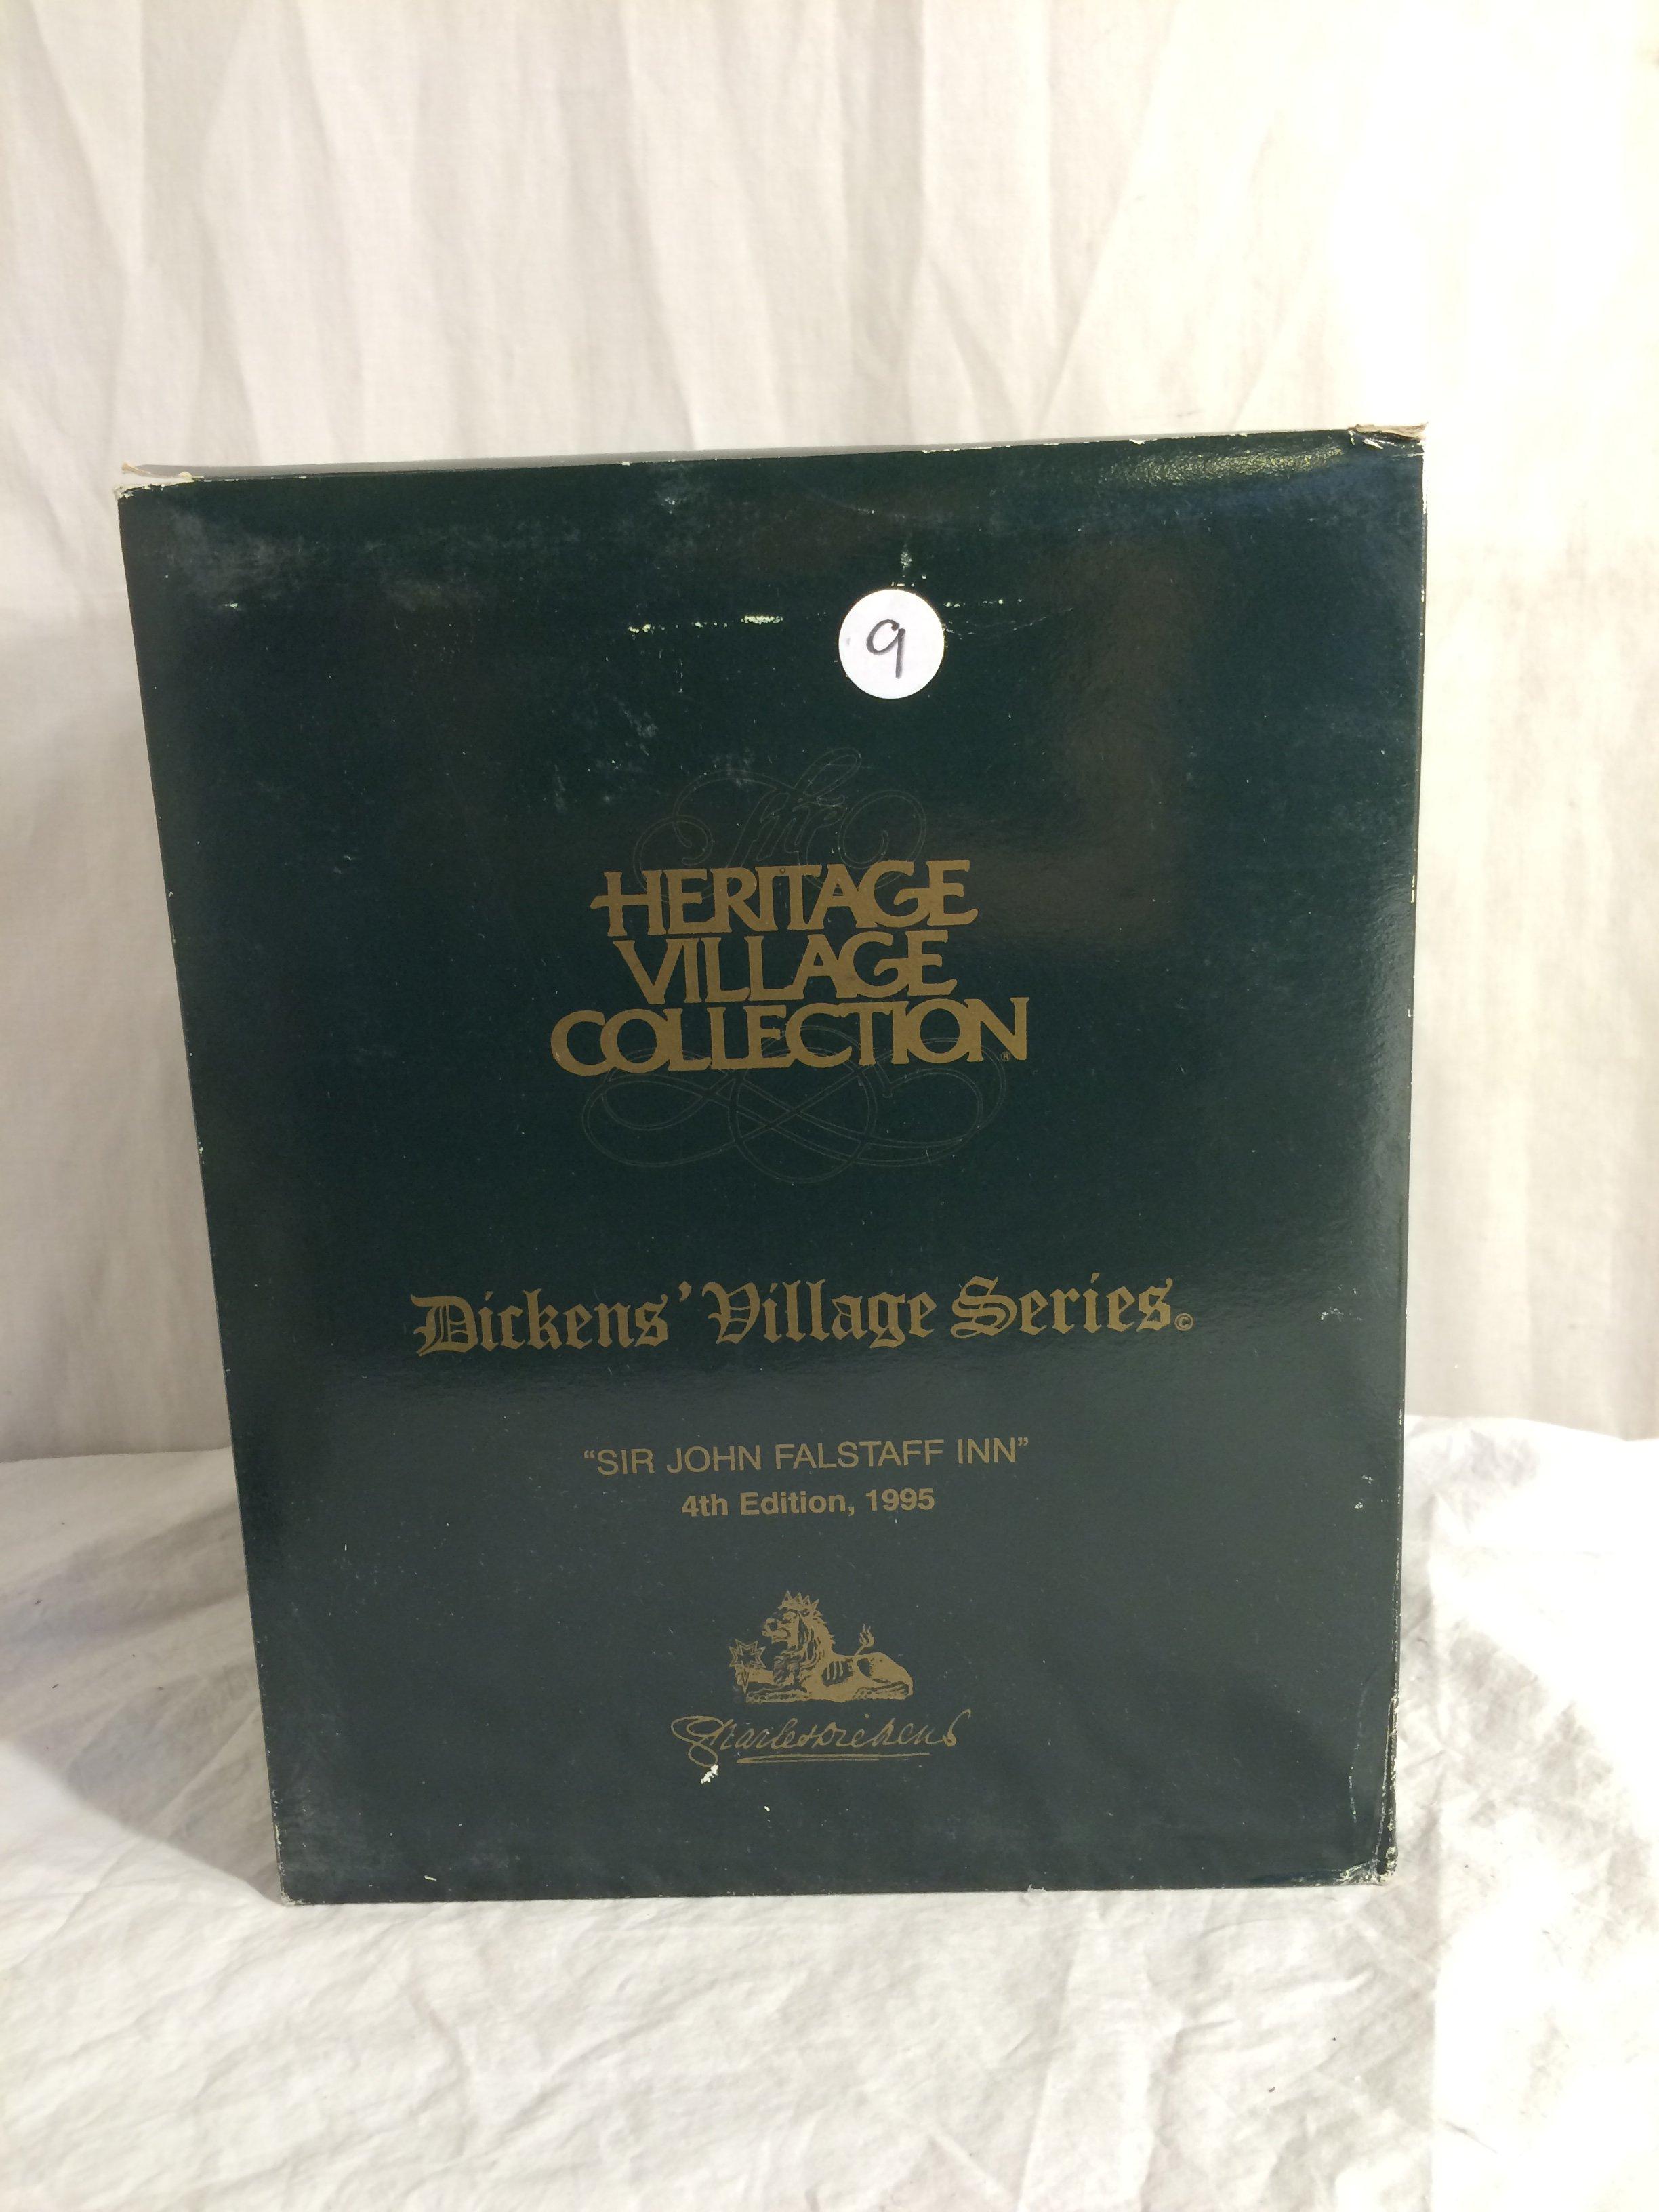 Department 56 Heritage Village Collection Dickens Village Series Dickens Series" Sir John Falstaff I